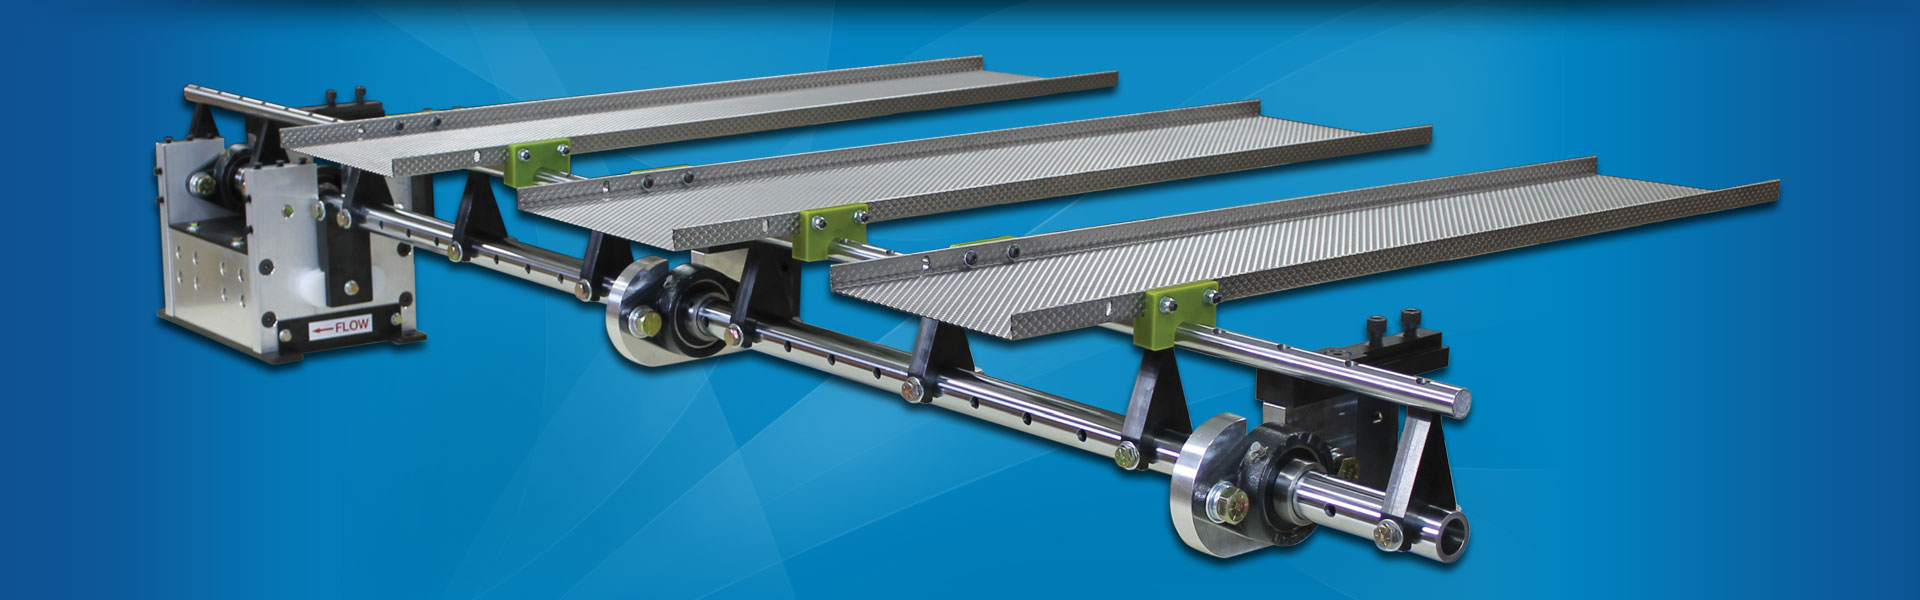 Radial Motion Pneumatic Conveyor Systems